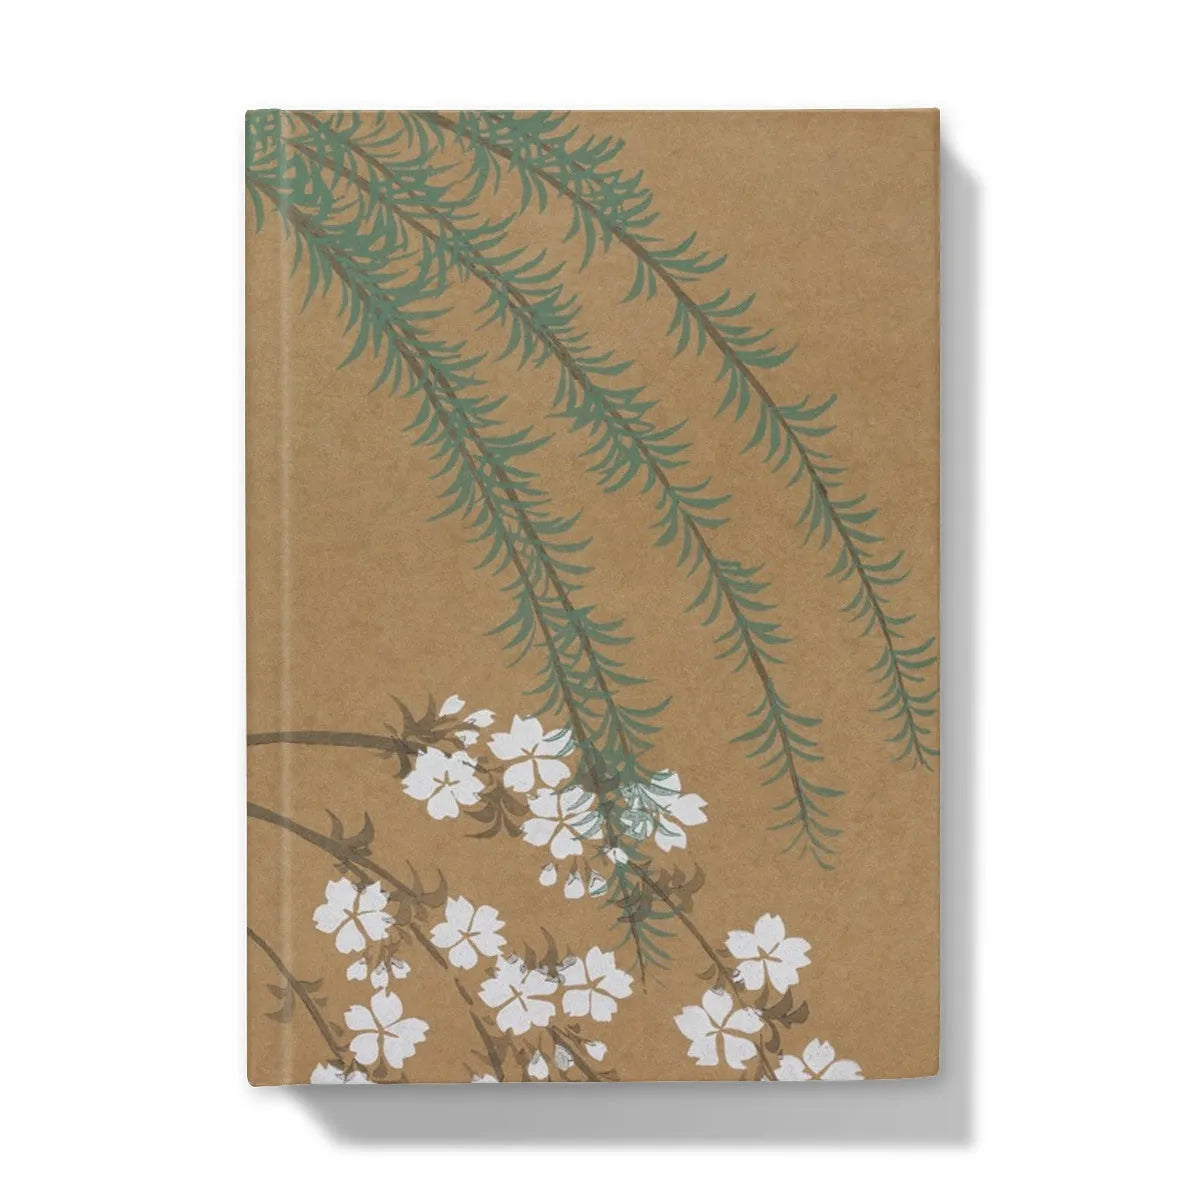 Blossoms From Momoyogusa By Kamisaka Sekka Hardback Journal - 5’x7’ / Lined - Notebooks & Notepads - Aesthetic Art